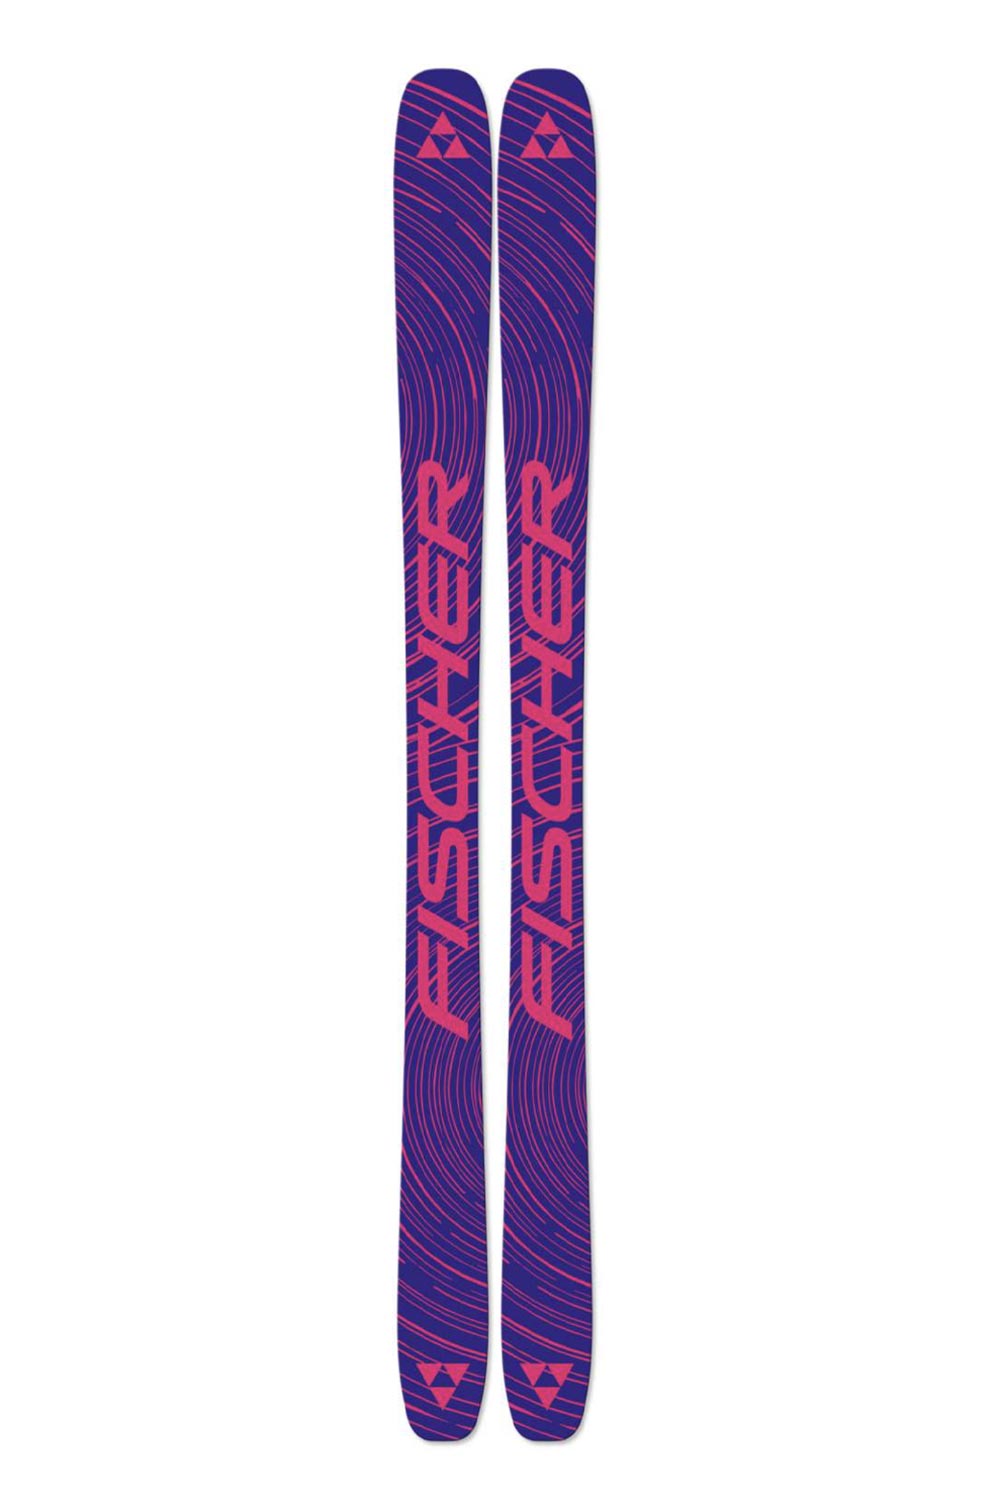 bottom of Fischer Nightstick skis, purple and pink swirly pattern